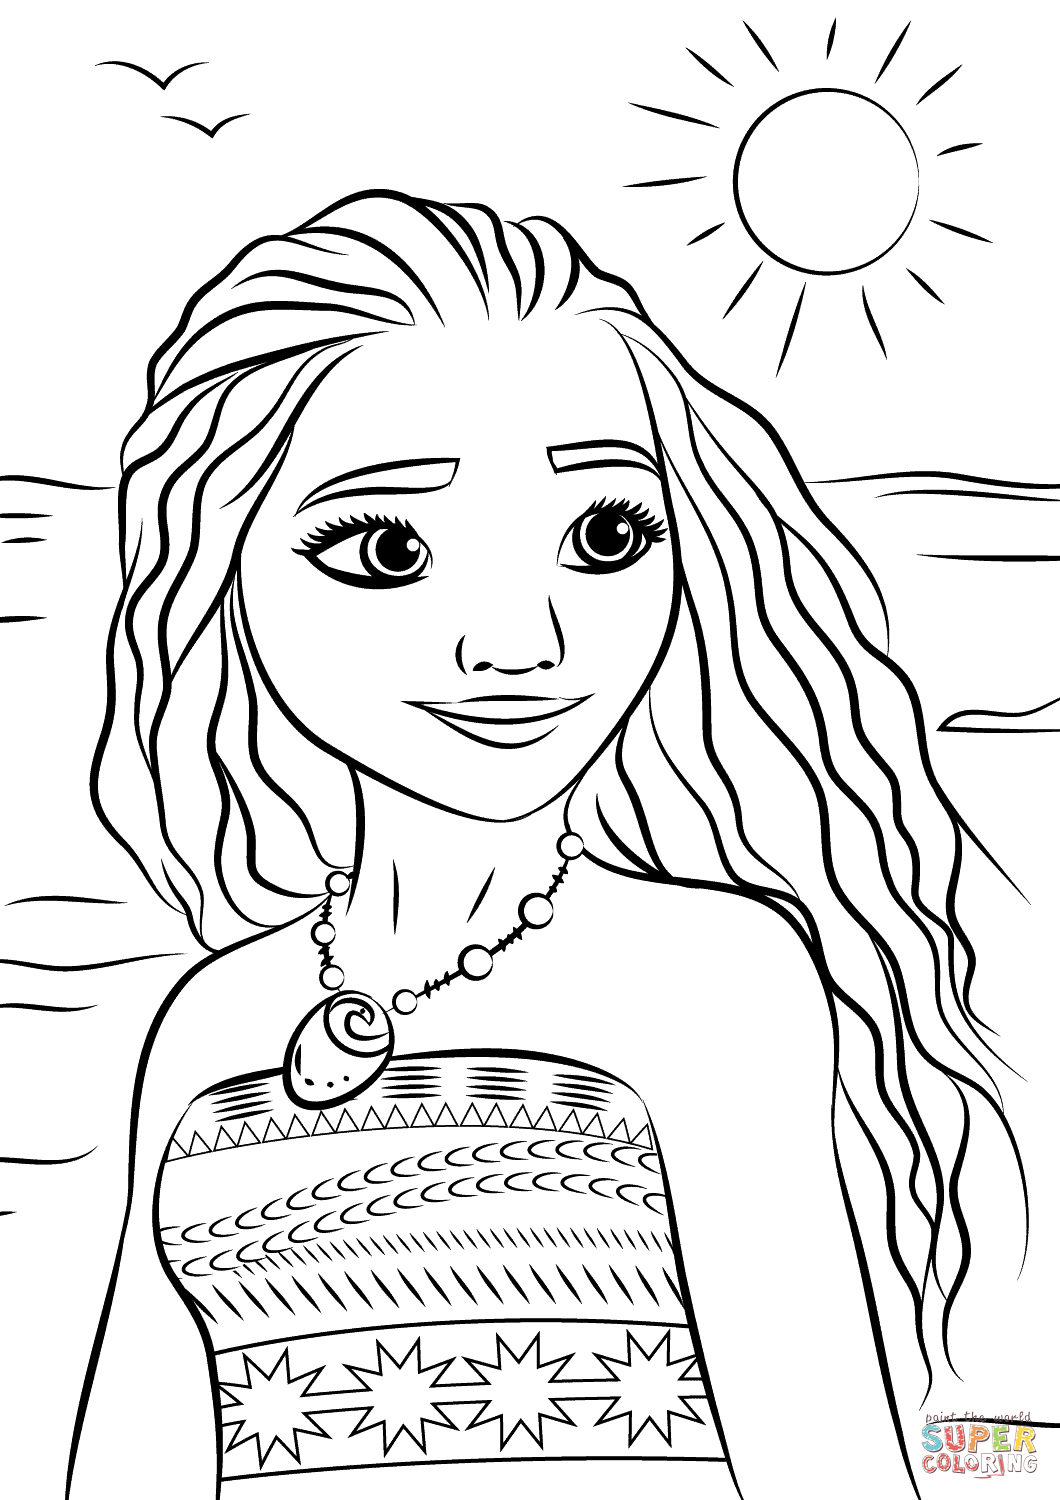 Princess Moana Portrait Coloring Page | Free Printable Coloring - Free Printable Coloring Pages